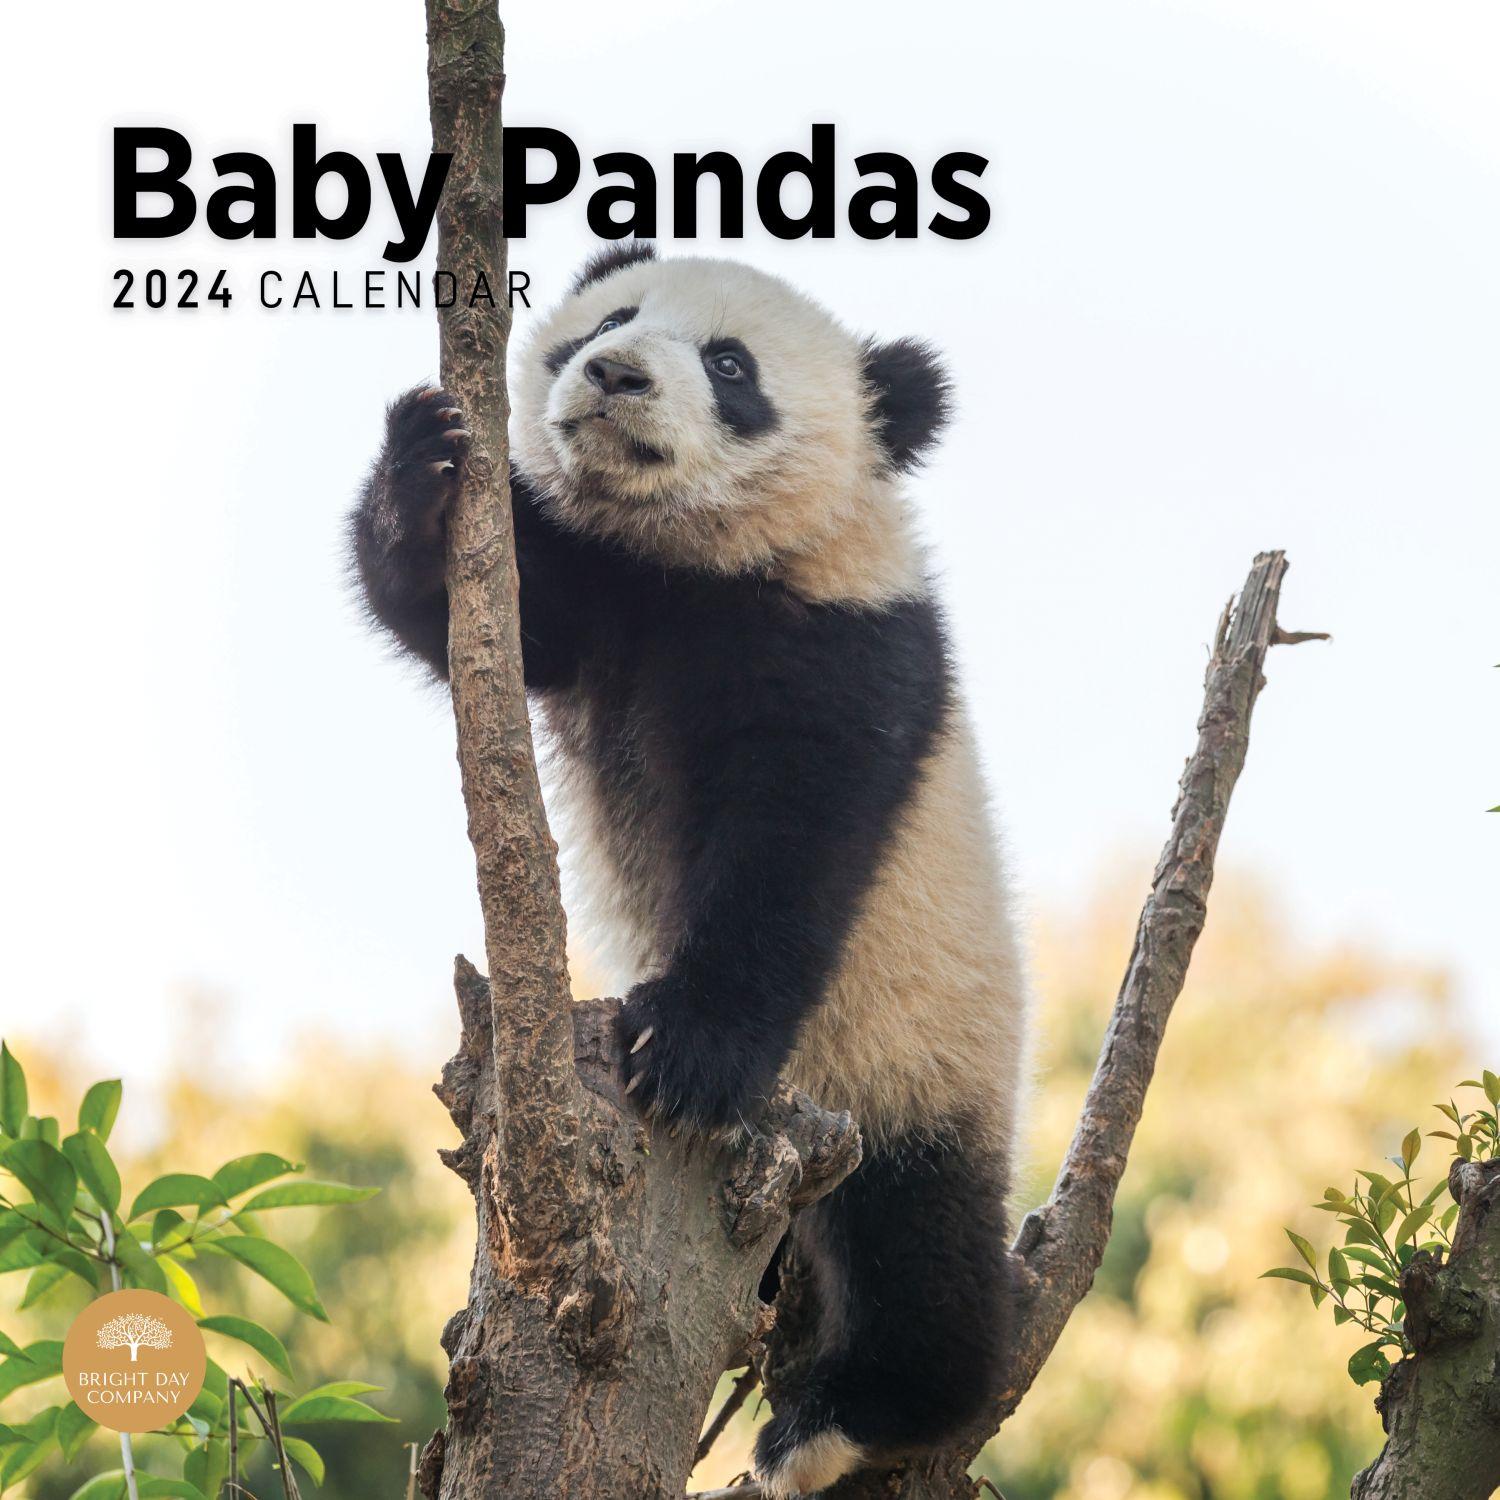 Baby Pandas 2024 Wall Calendar Calendars com